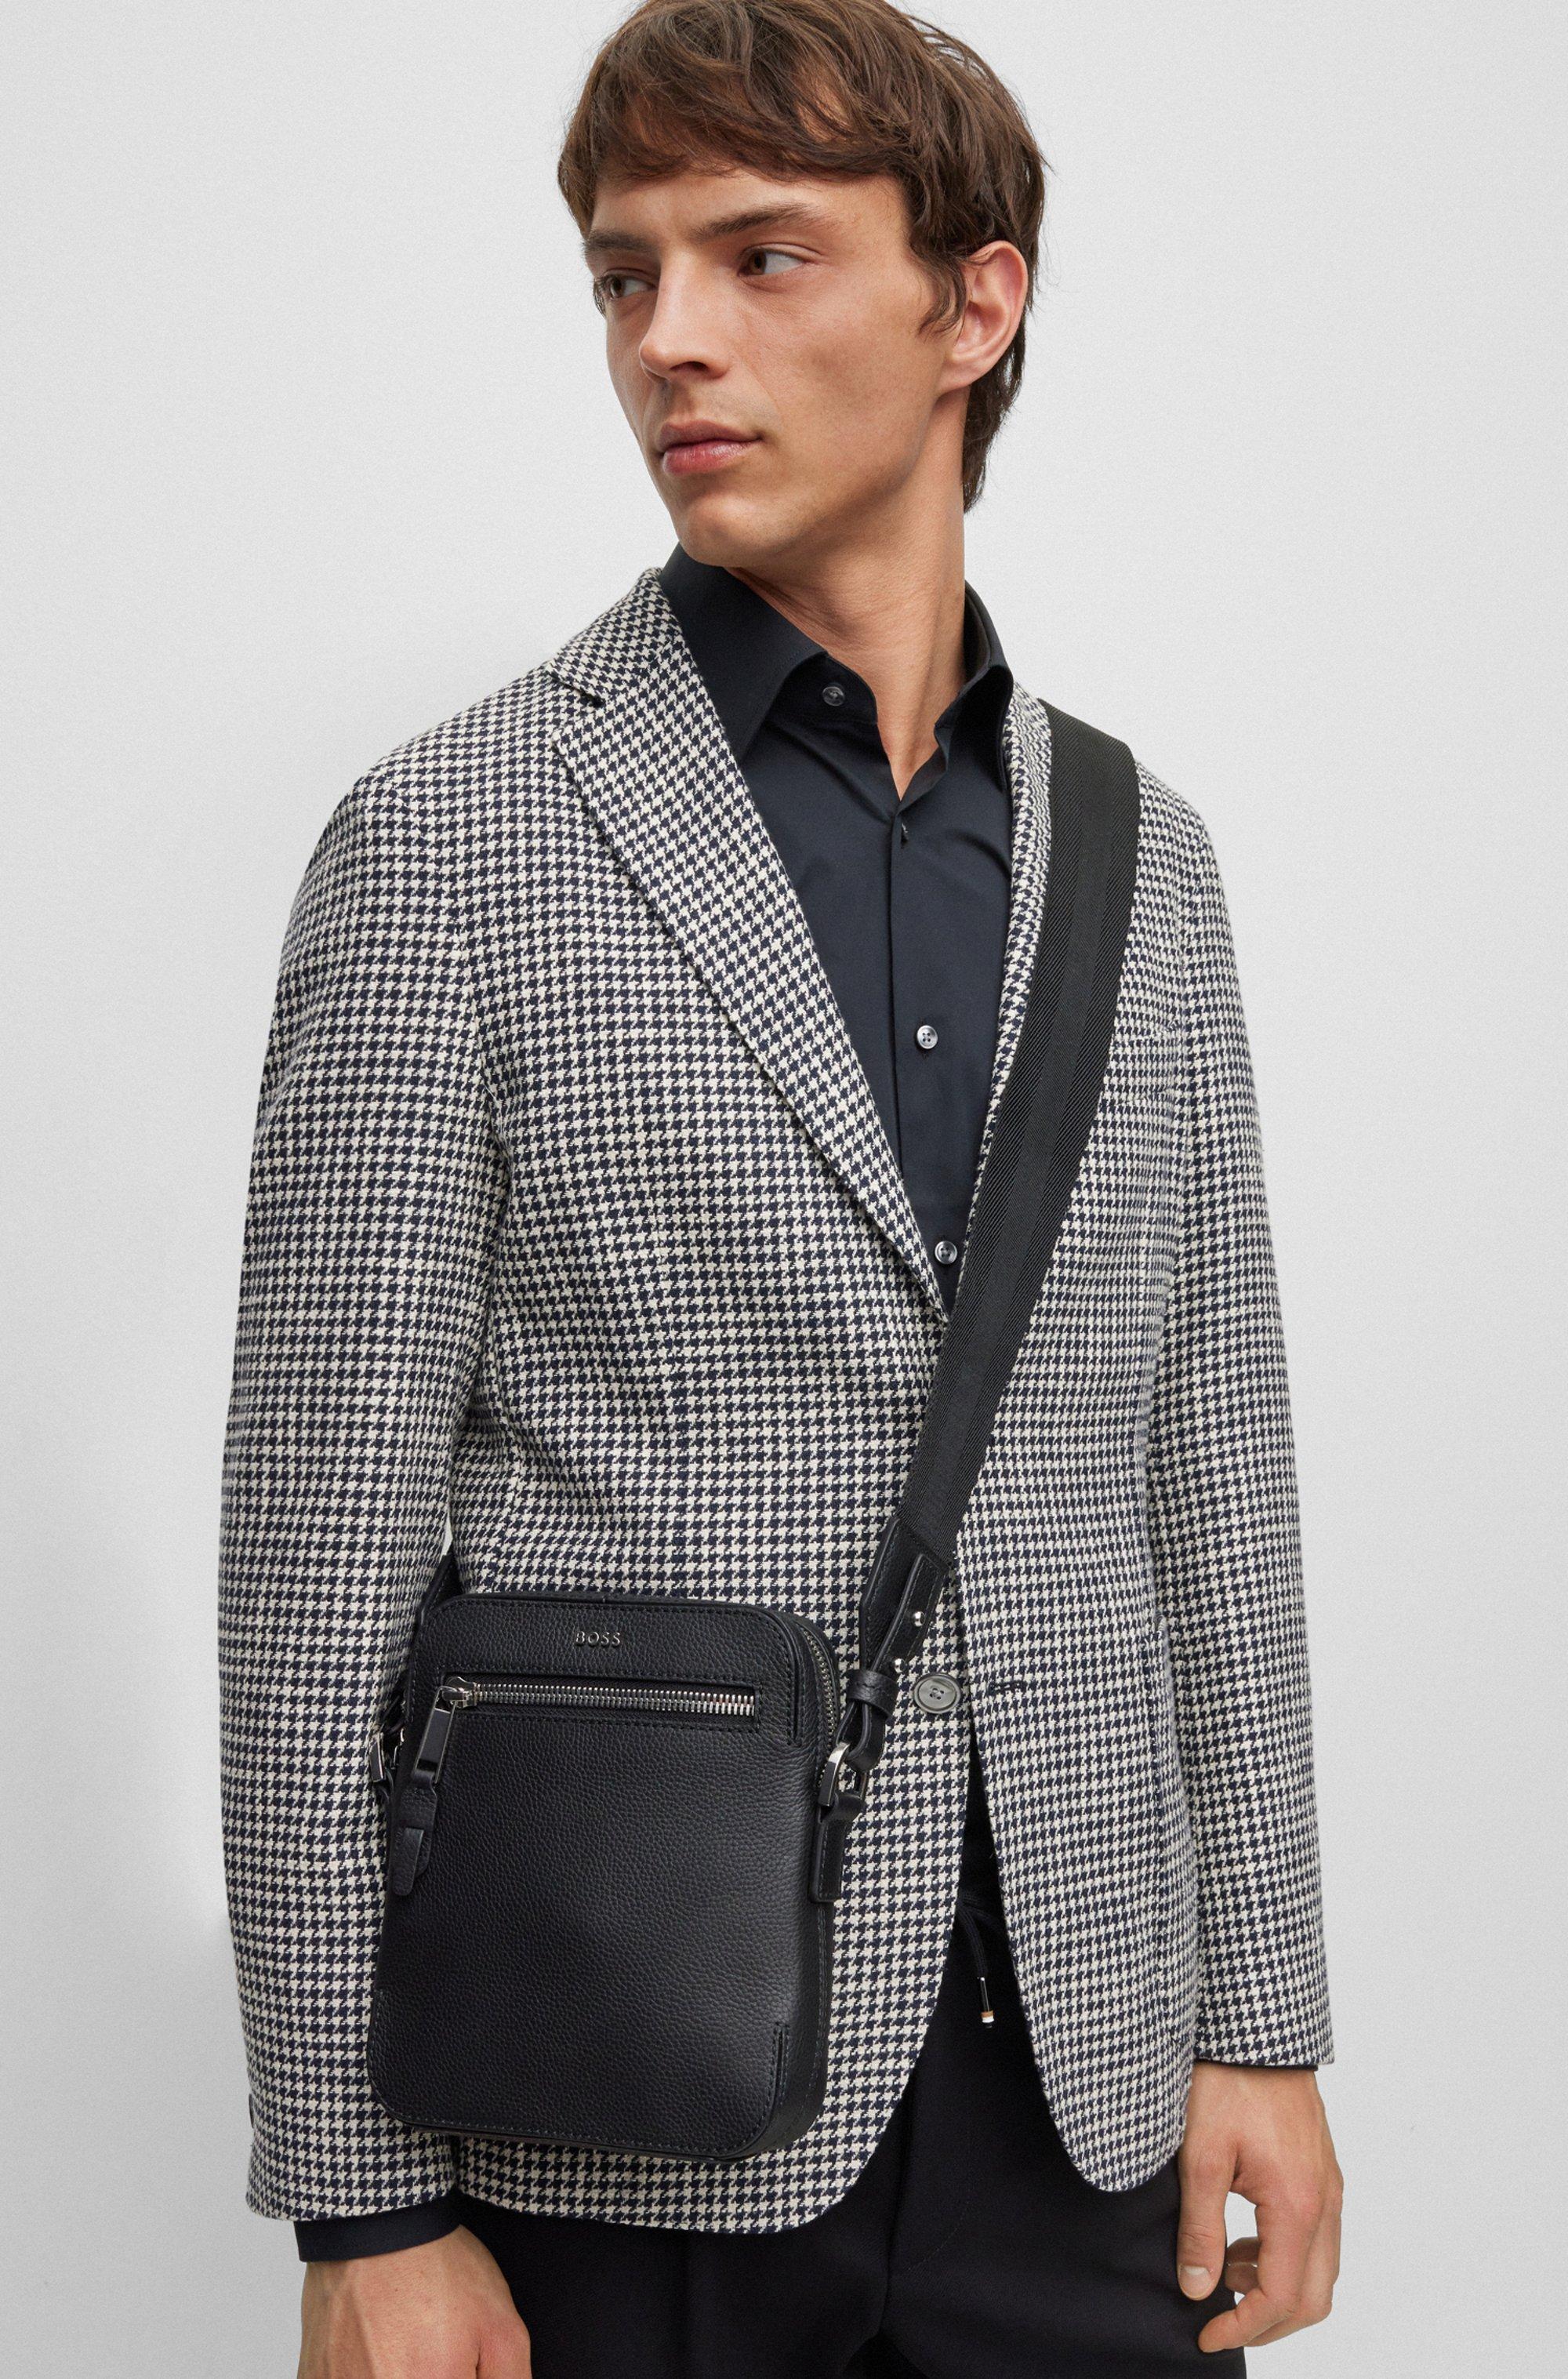 Men's Soft Matte Zip Rectangular Grained Leather Reporter Bag